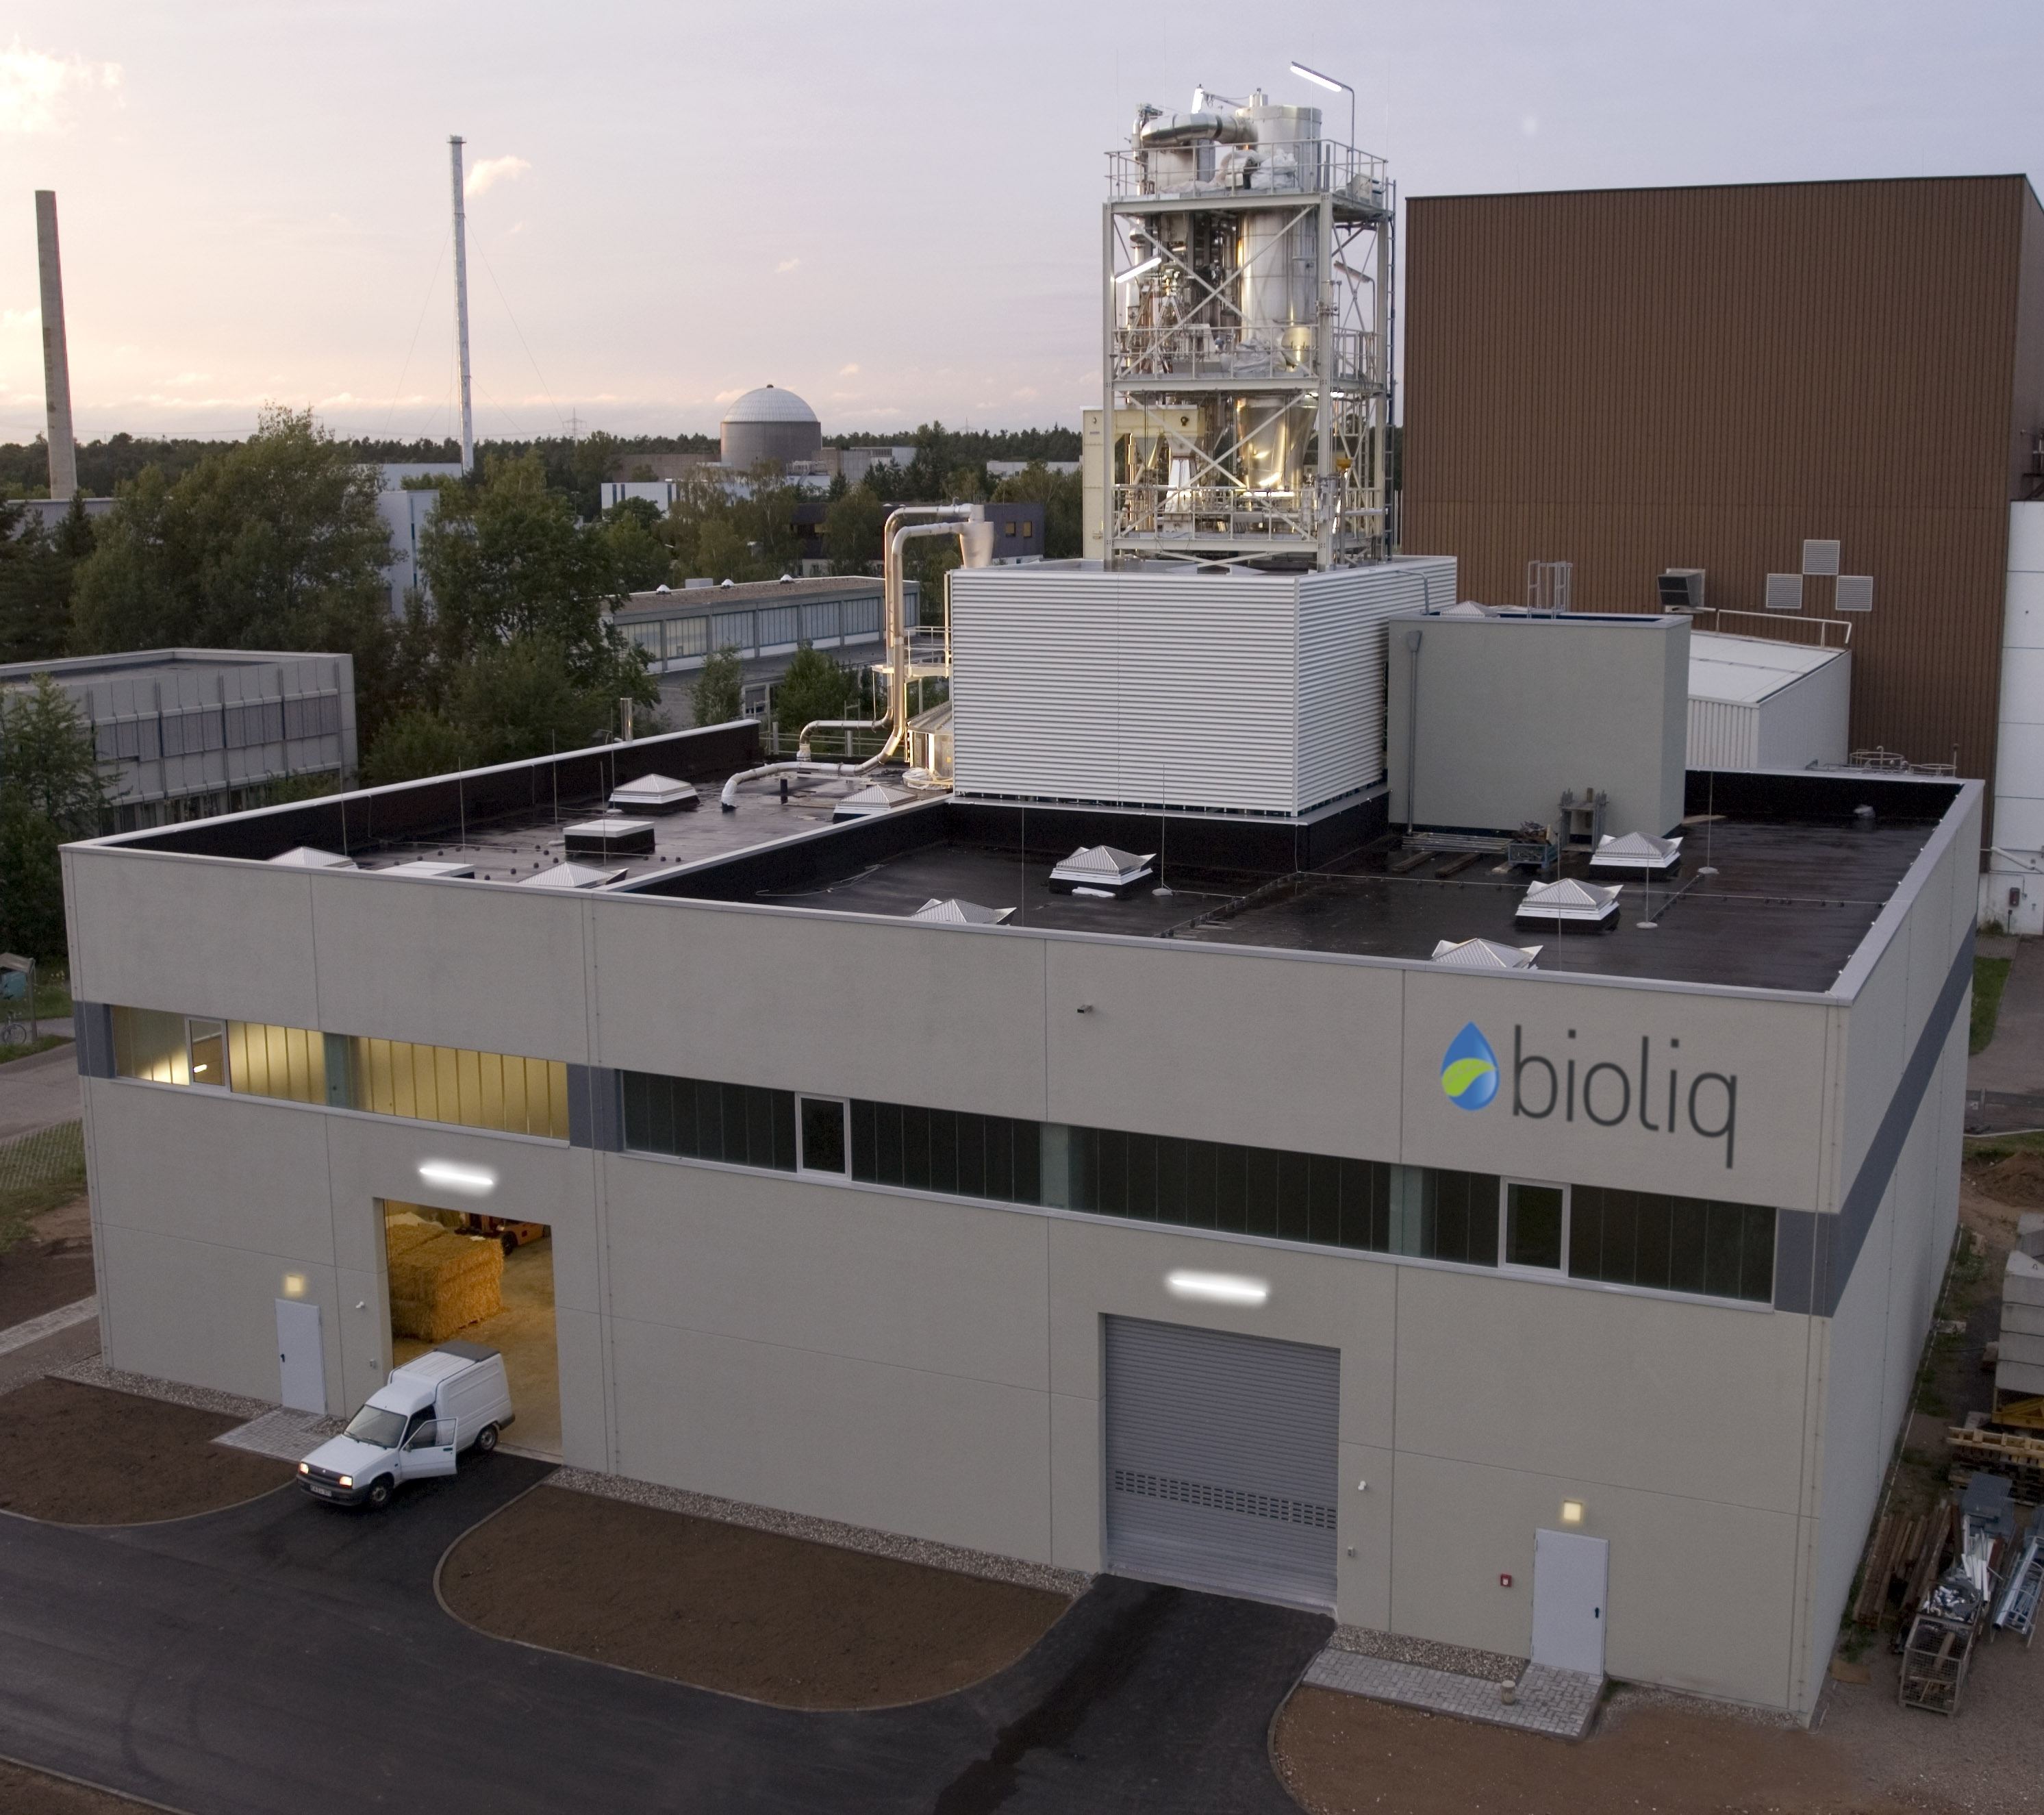 bioliq® pilot plant at the Forschungszentrum Karlsruhe